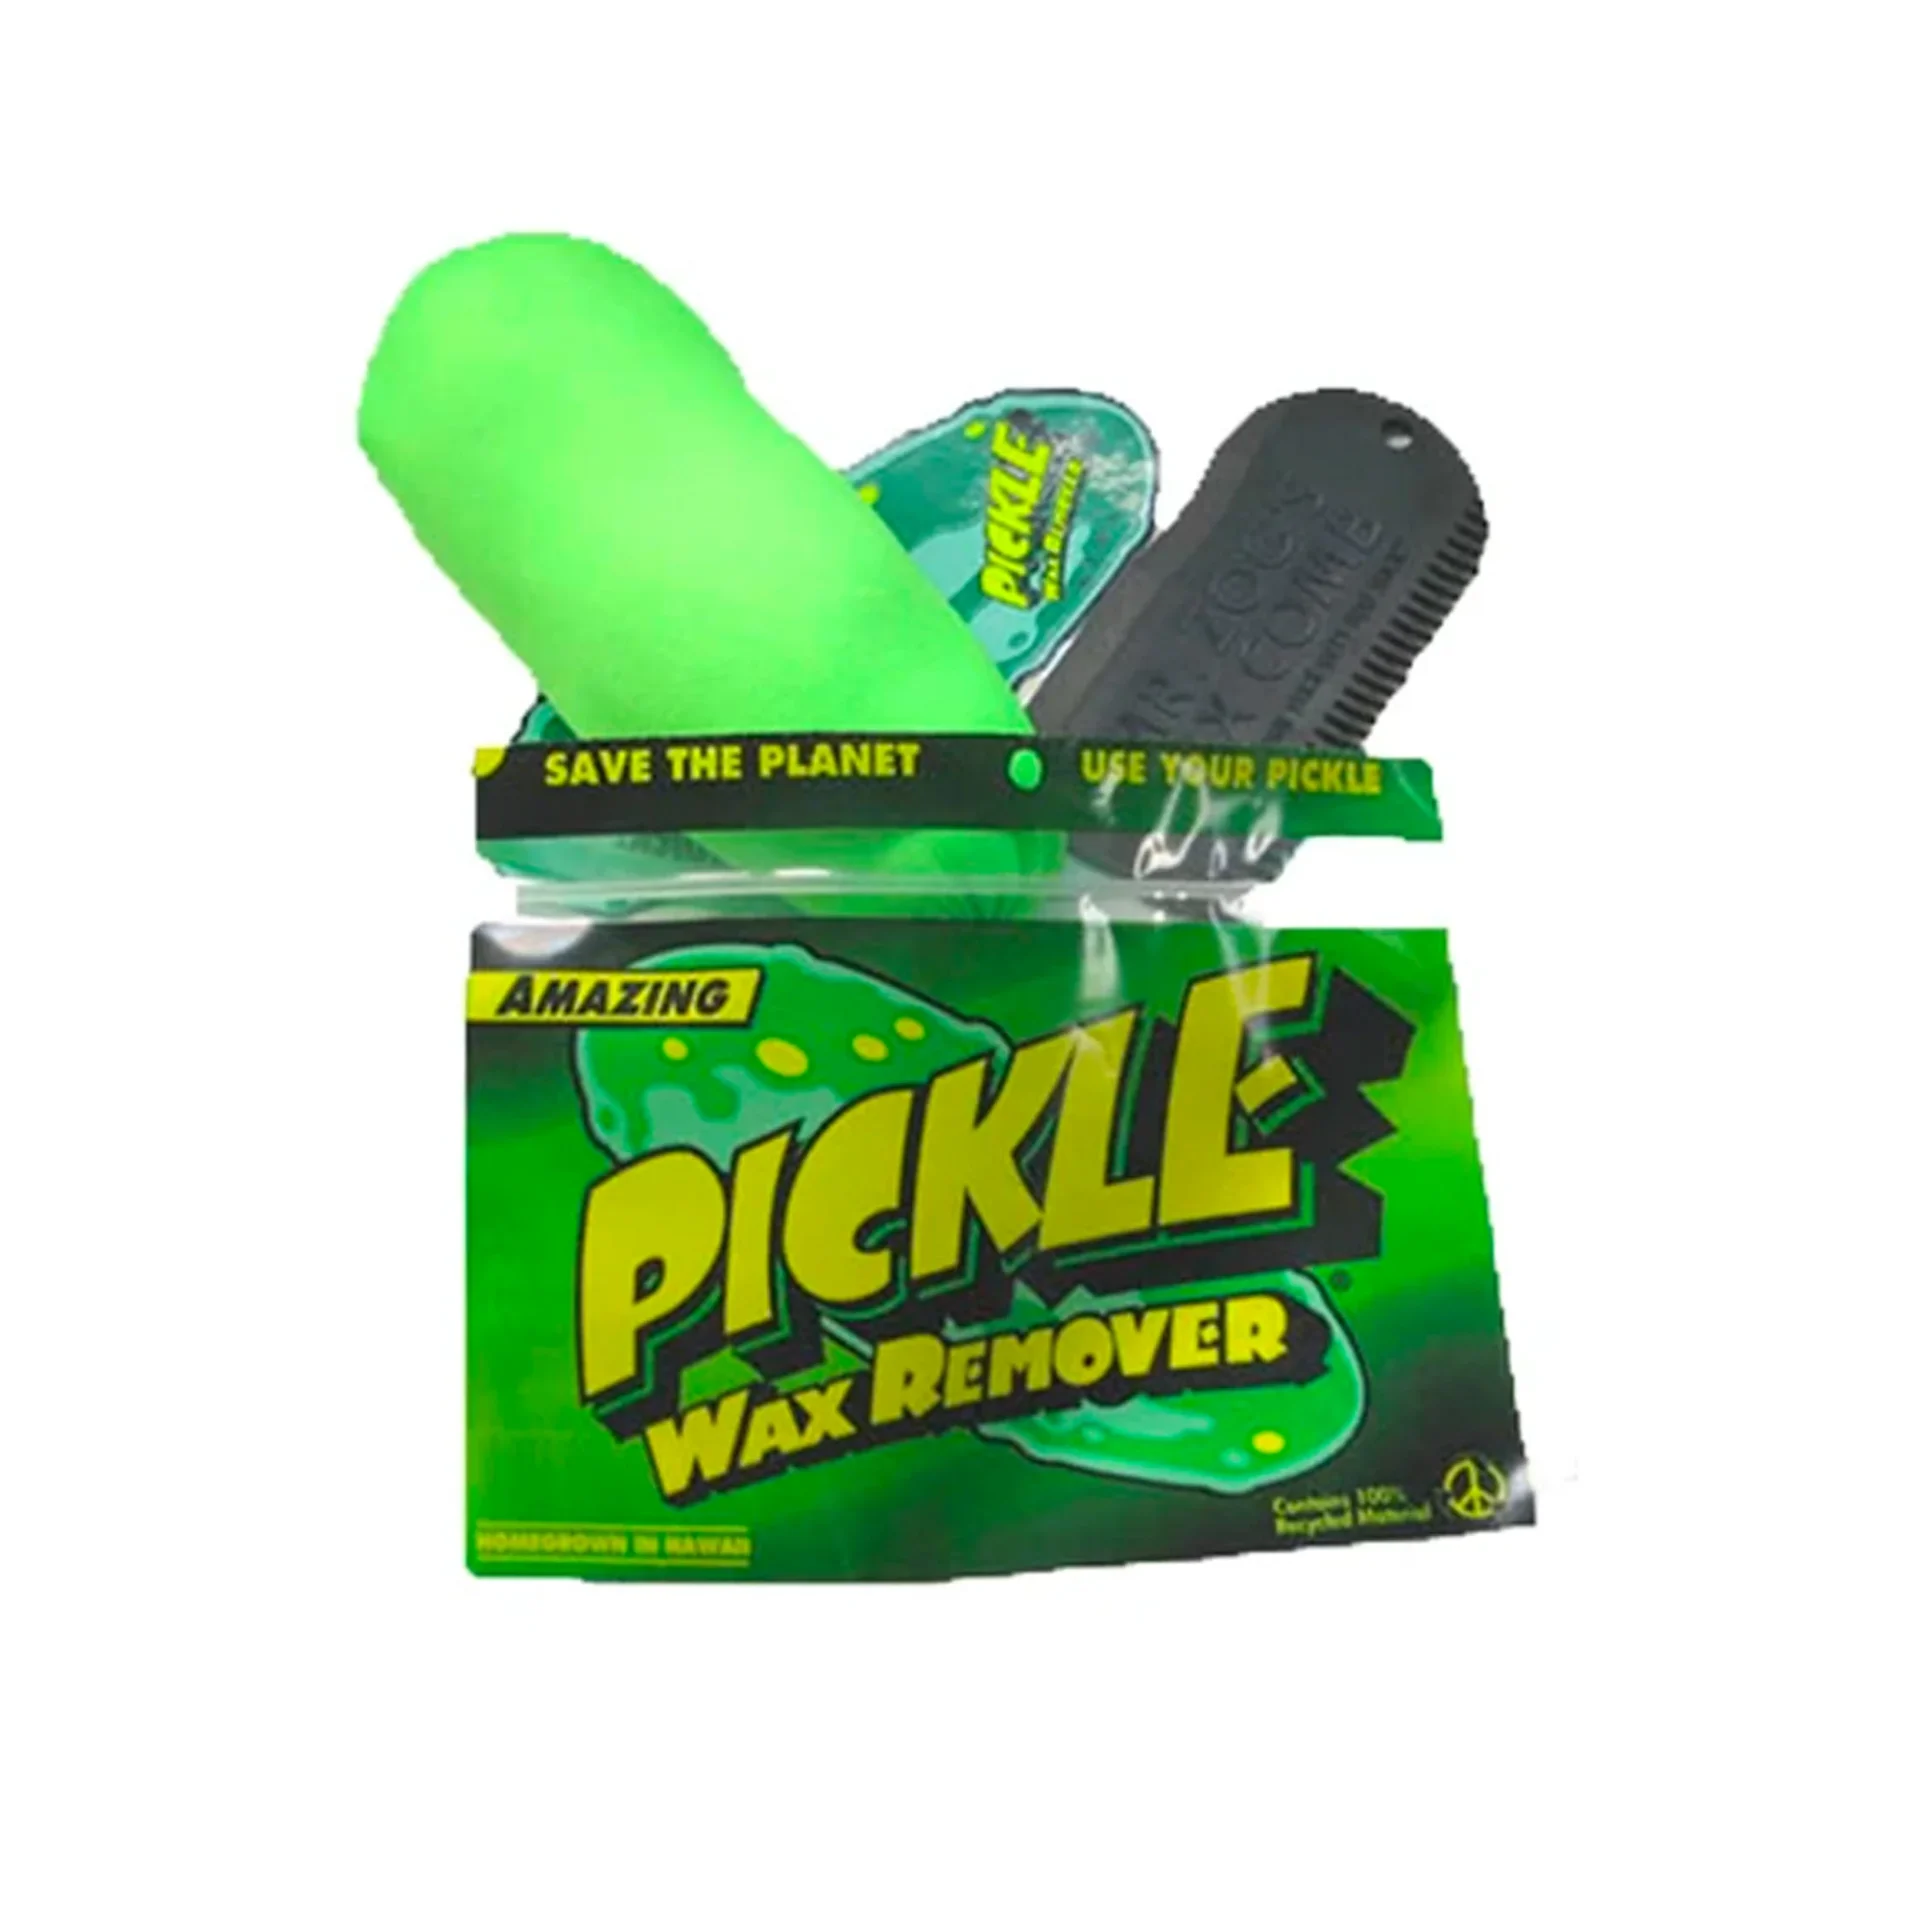 Se Pickle Wax Remover hos SurfMore